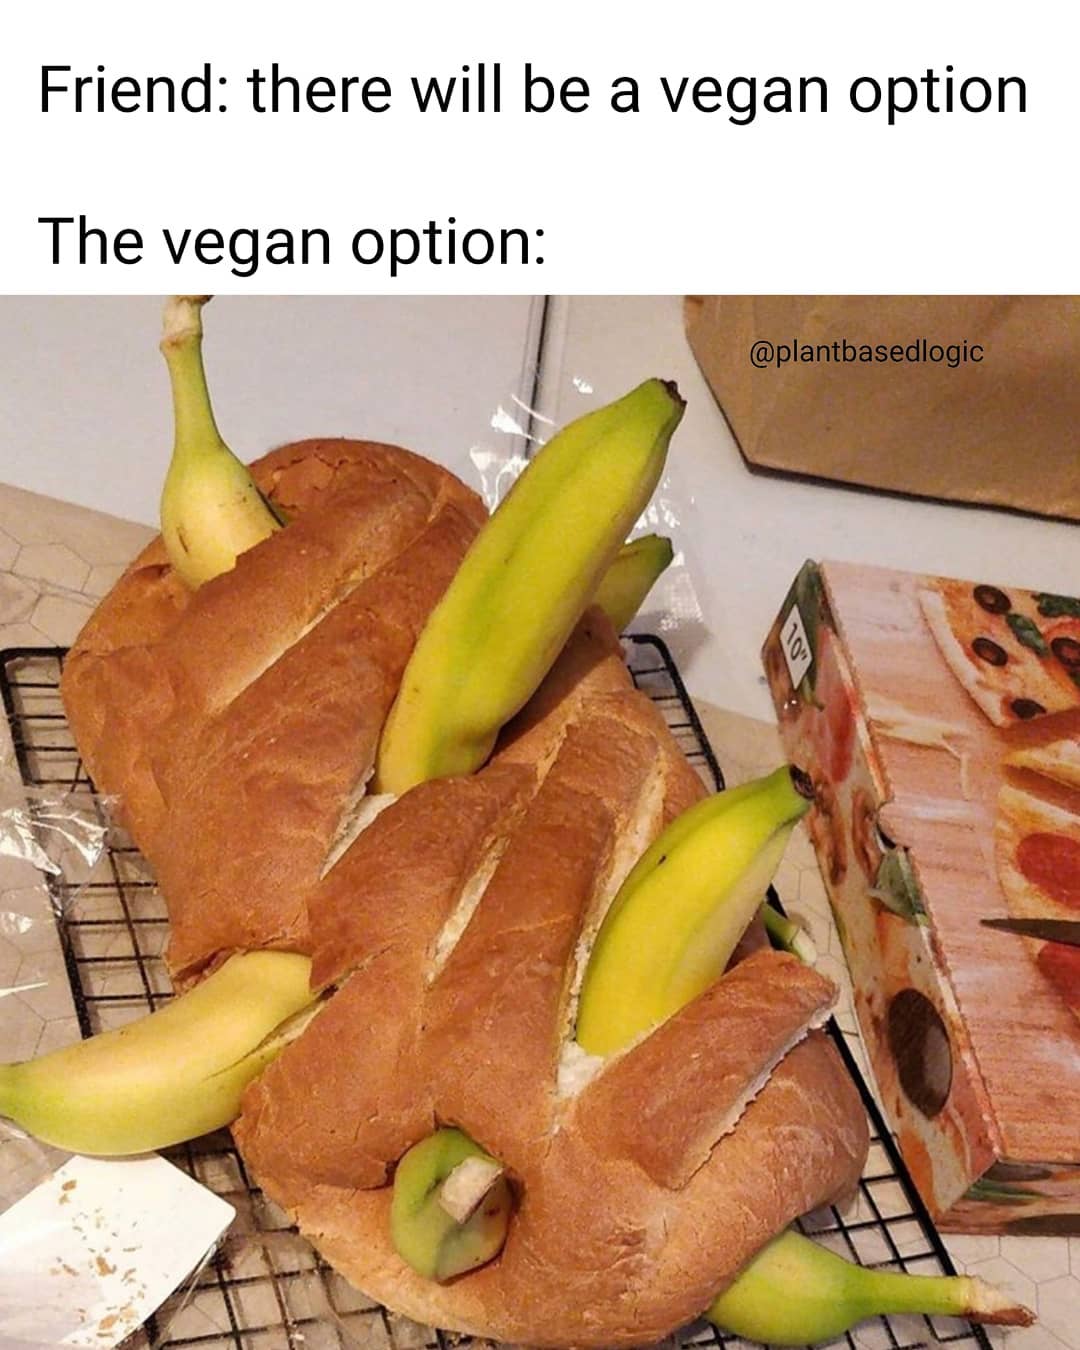 The vegan option